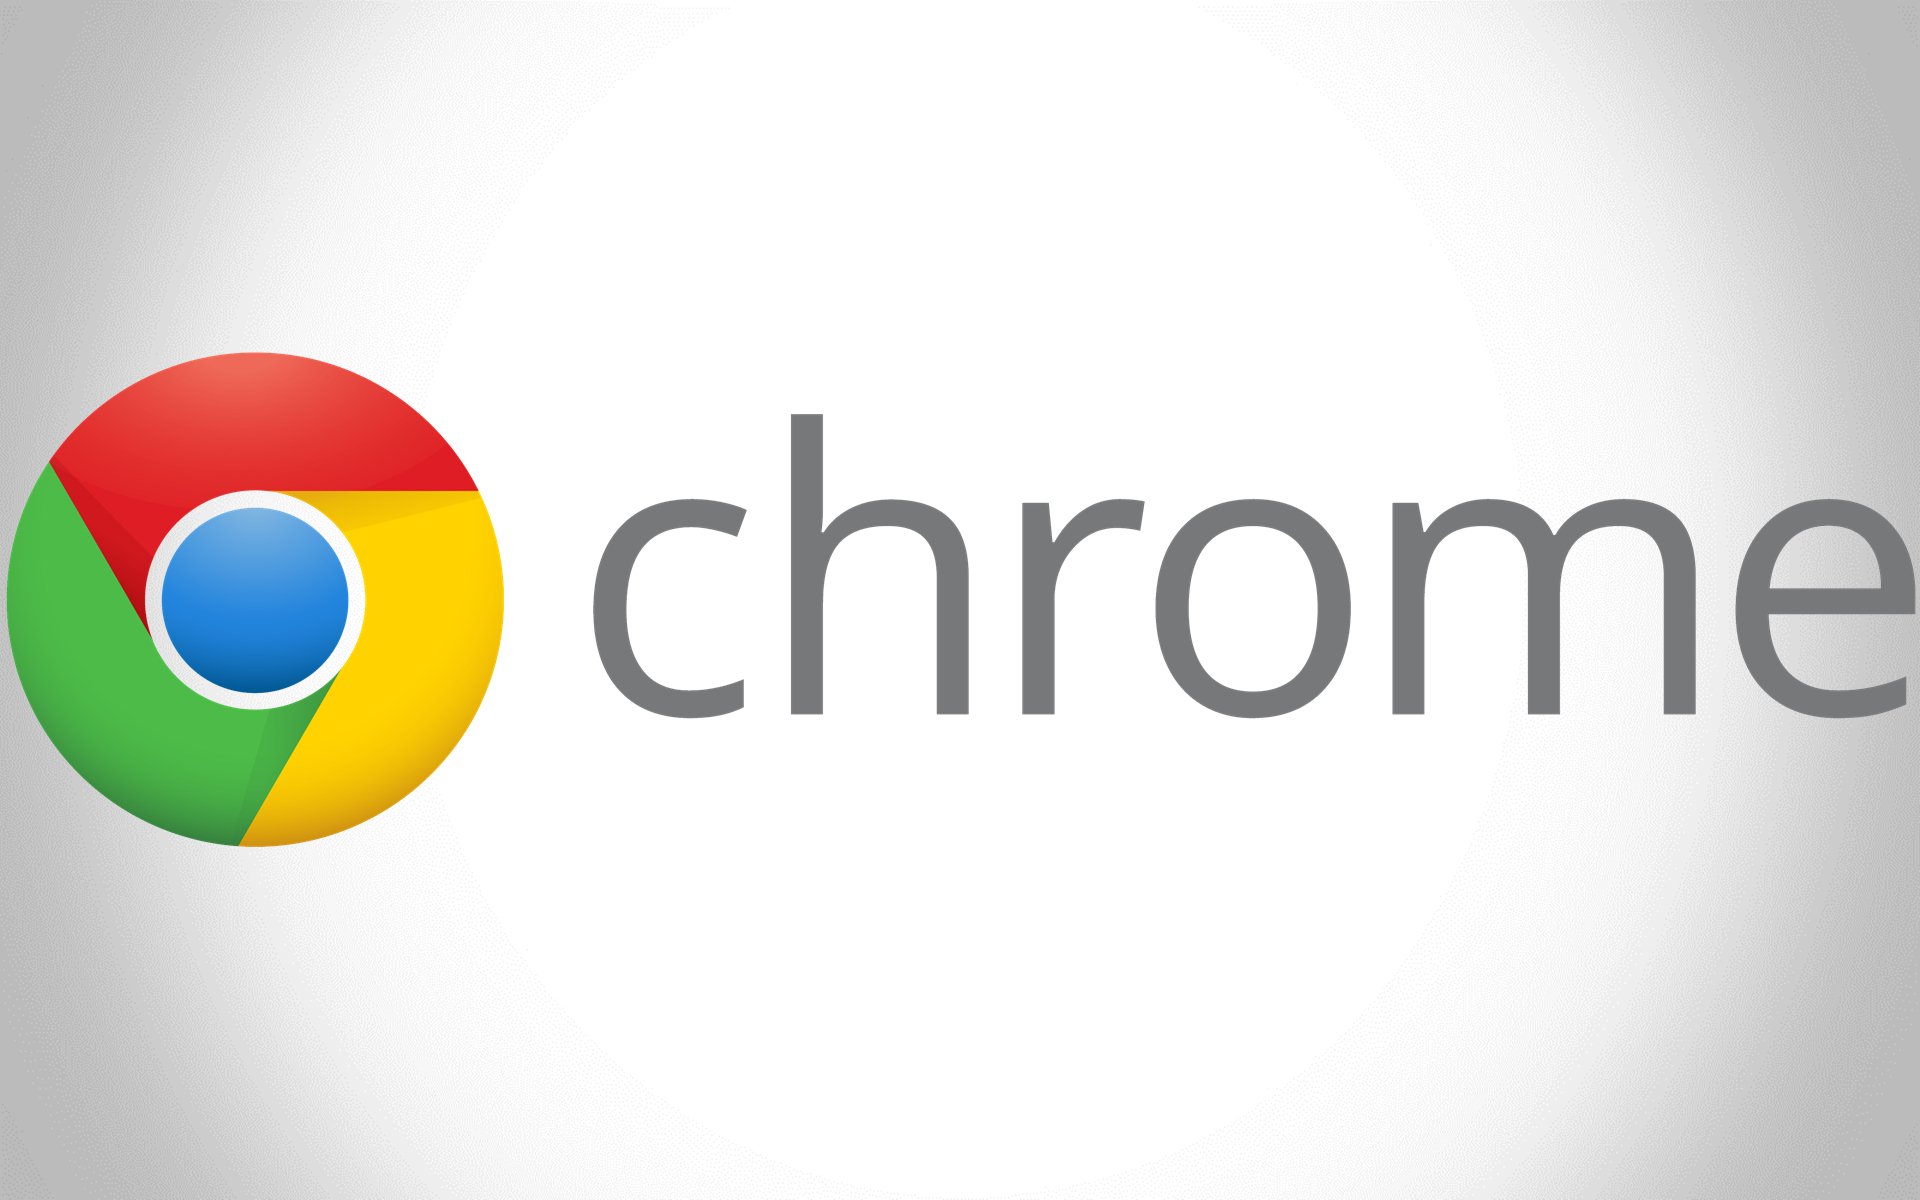 Google Chrome Full HD